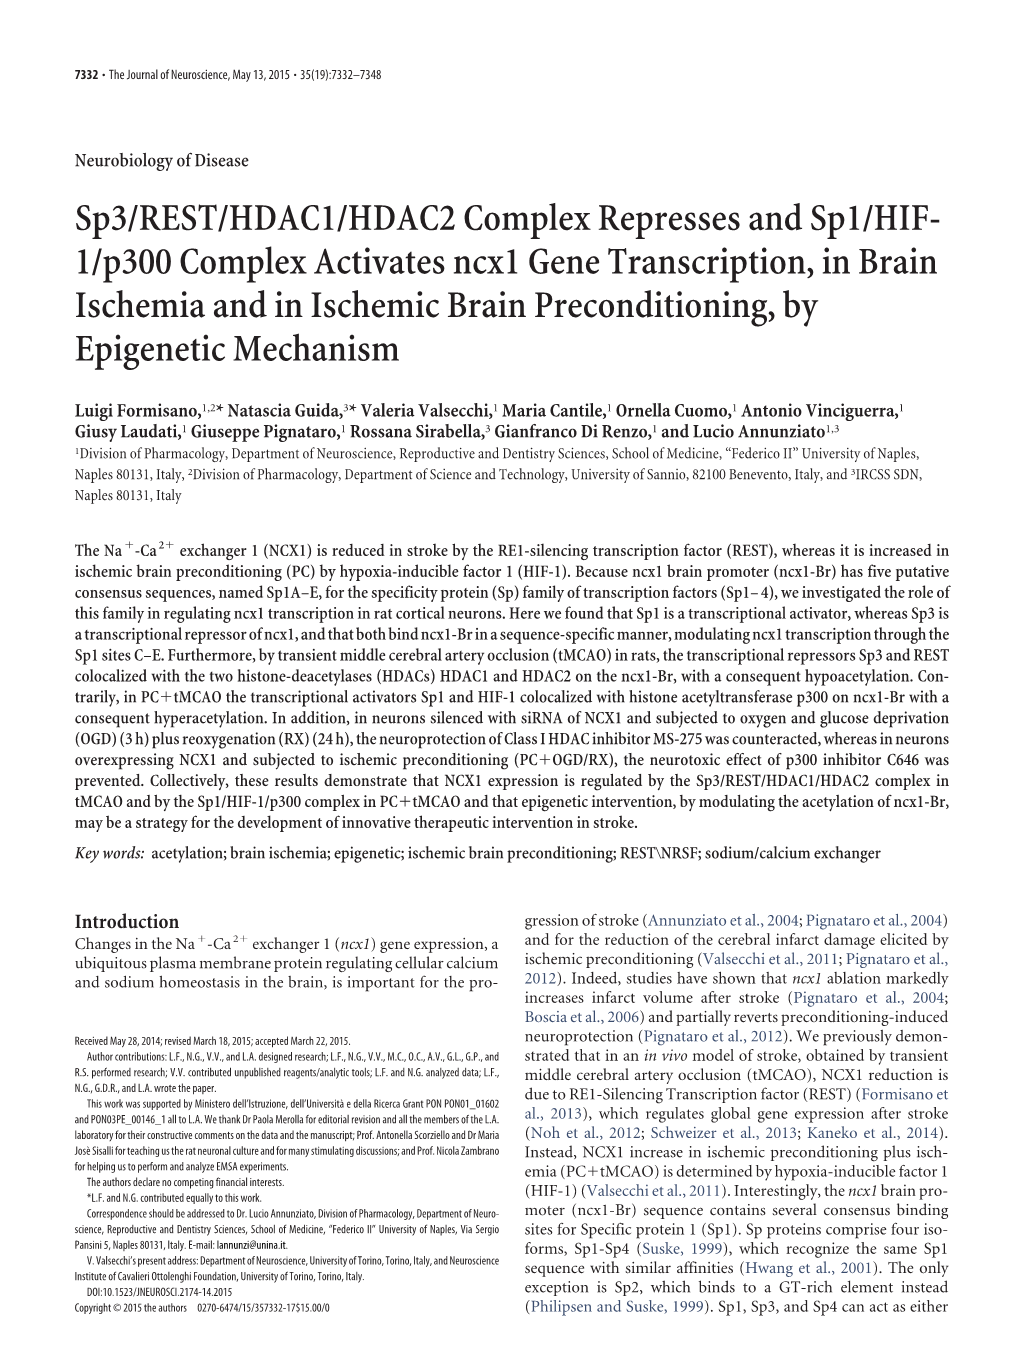 Sp3/REST/HDAC1/HDAC2 Complex Represses and Sp1/HIF